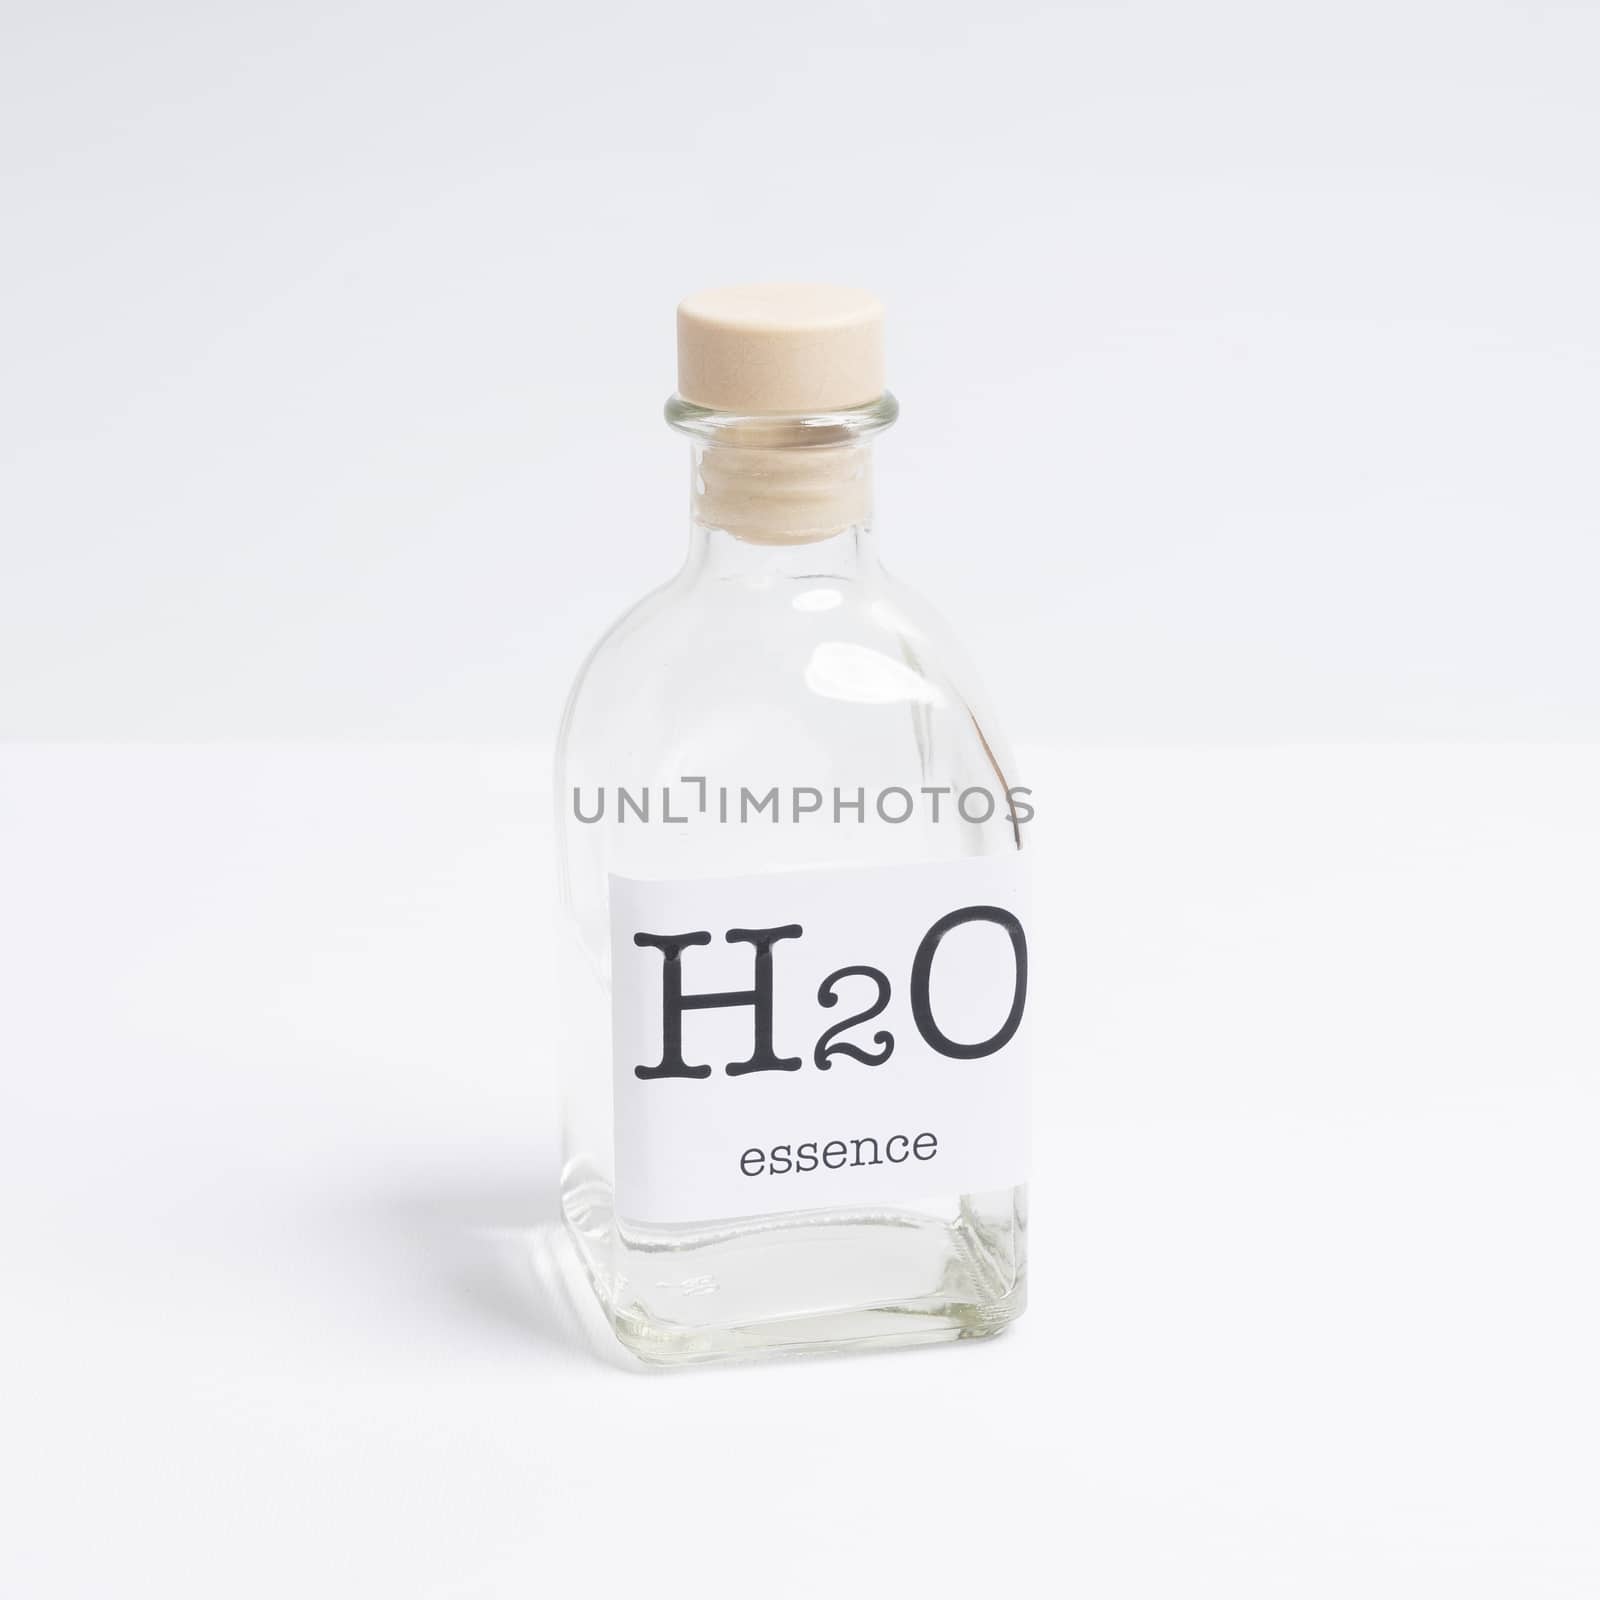 H2O essence by sergiodv